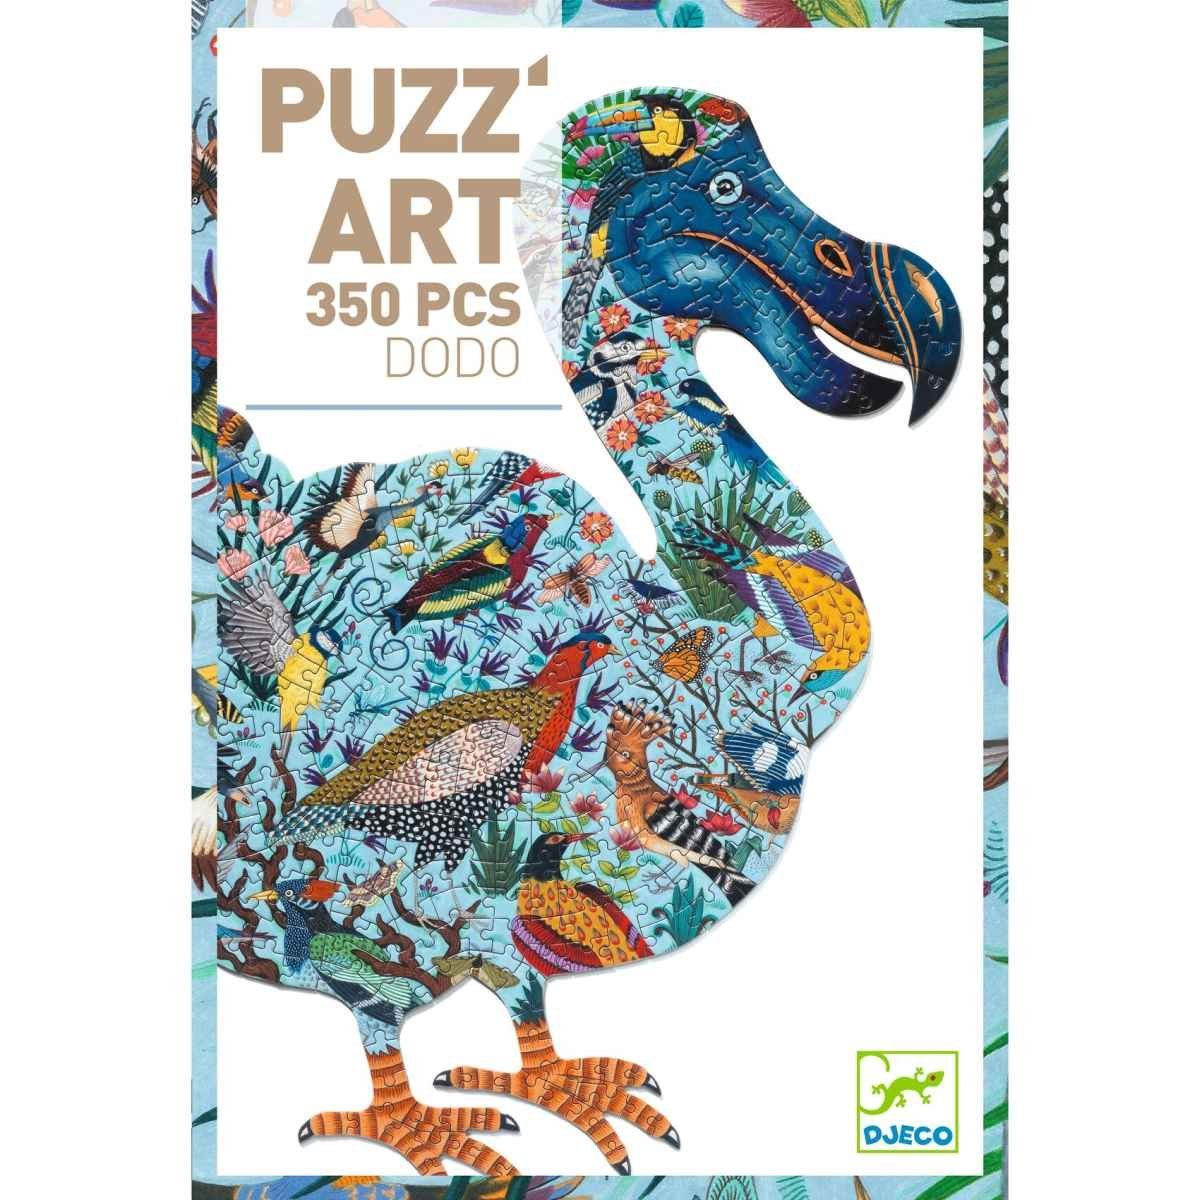 Tiere DJECO Konturenpuzzle Puzz'Art 350 Puzzleteile Teile Tiermotive,